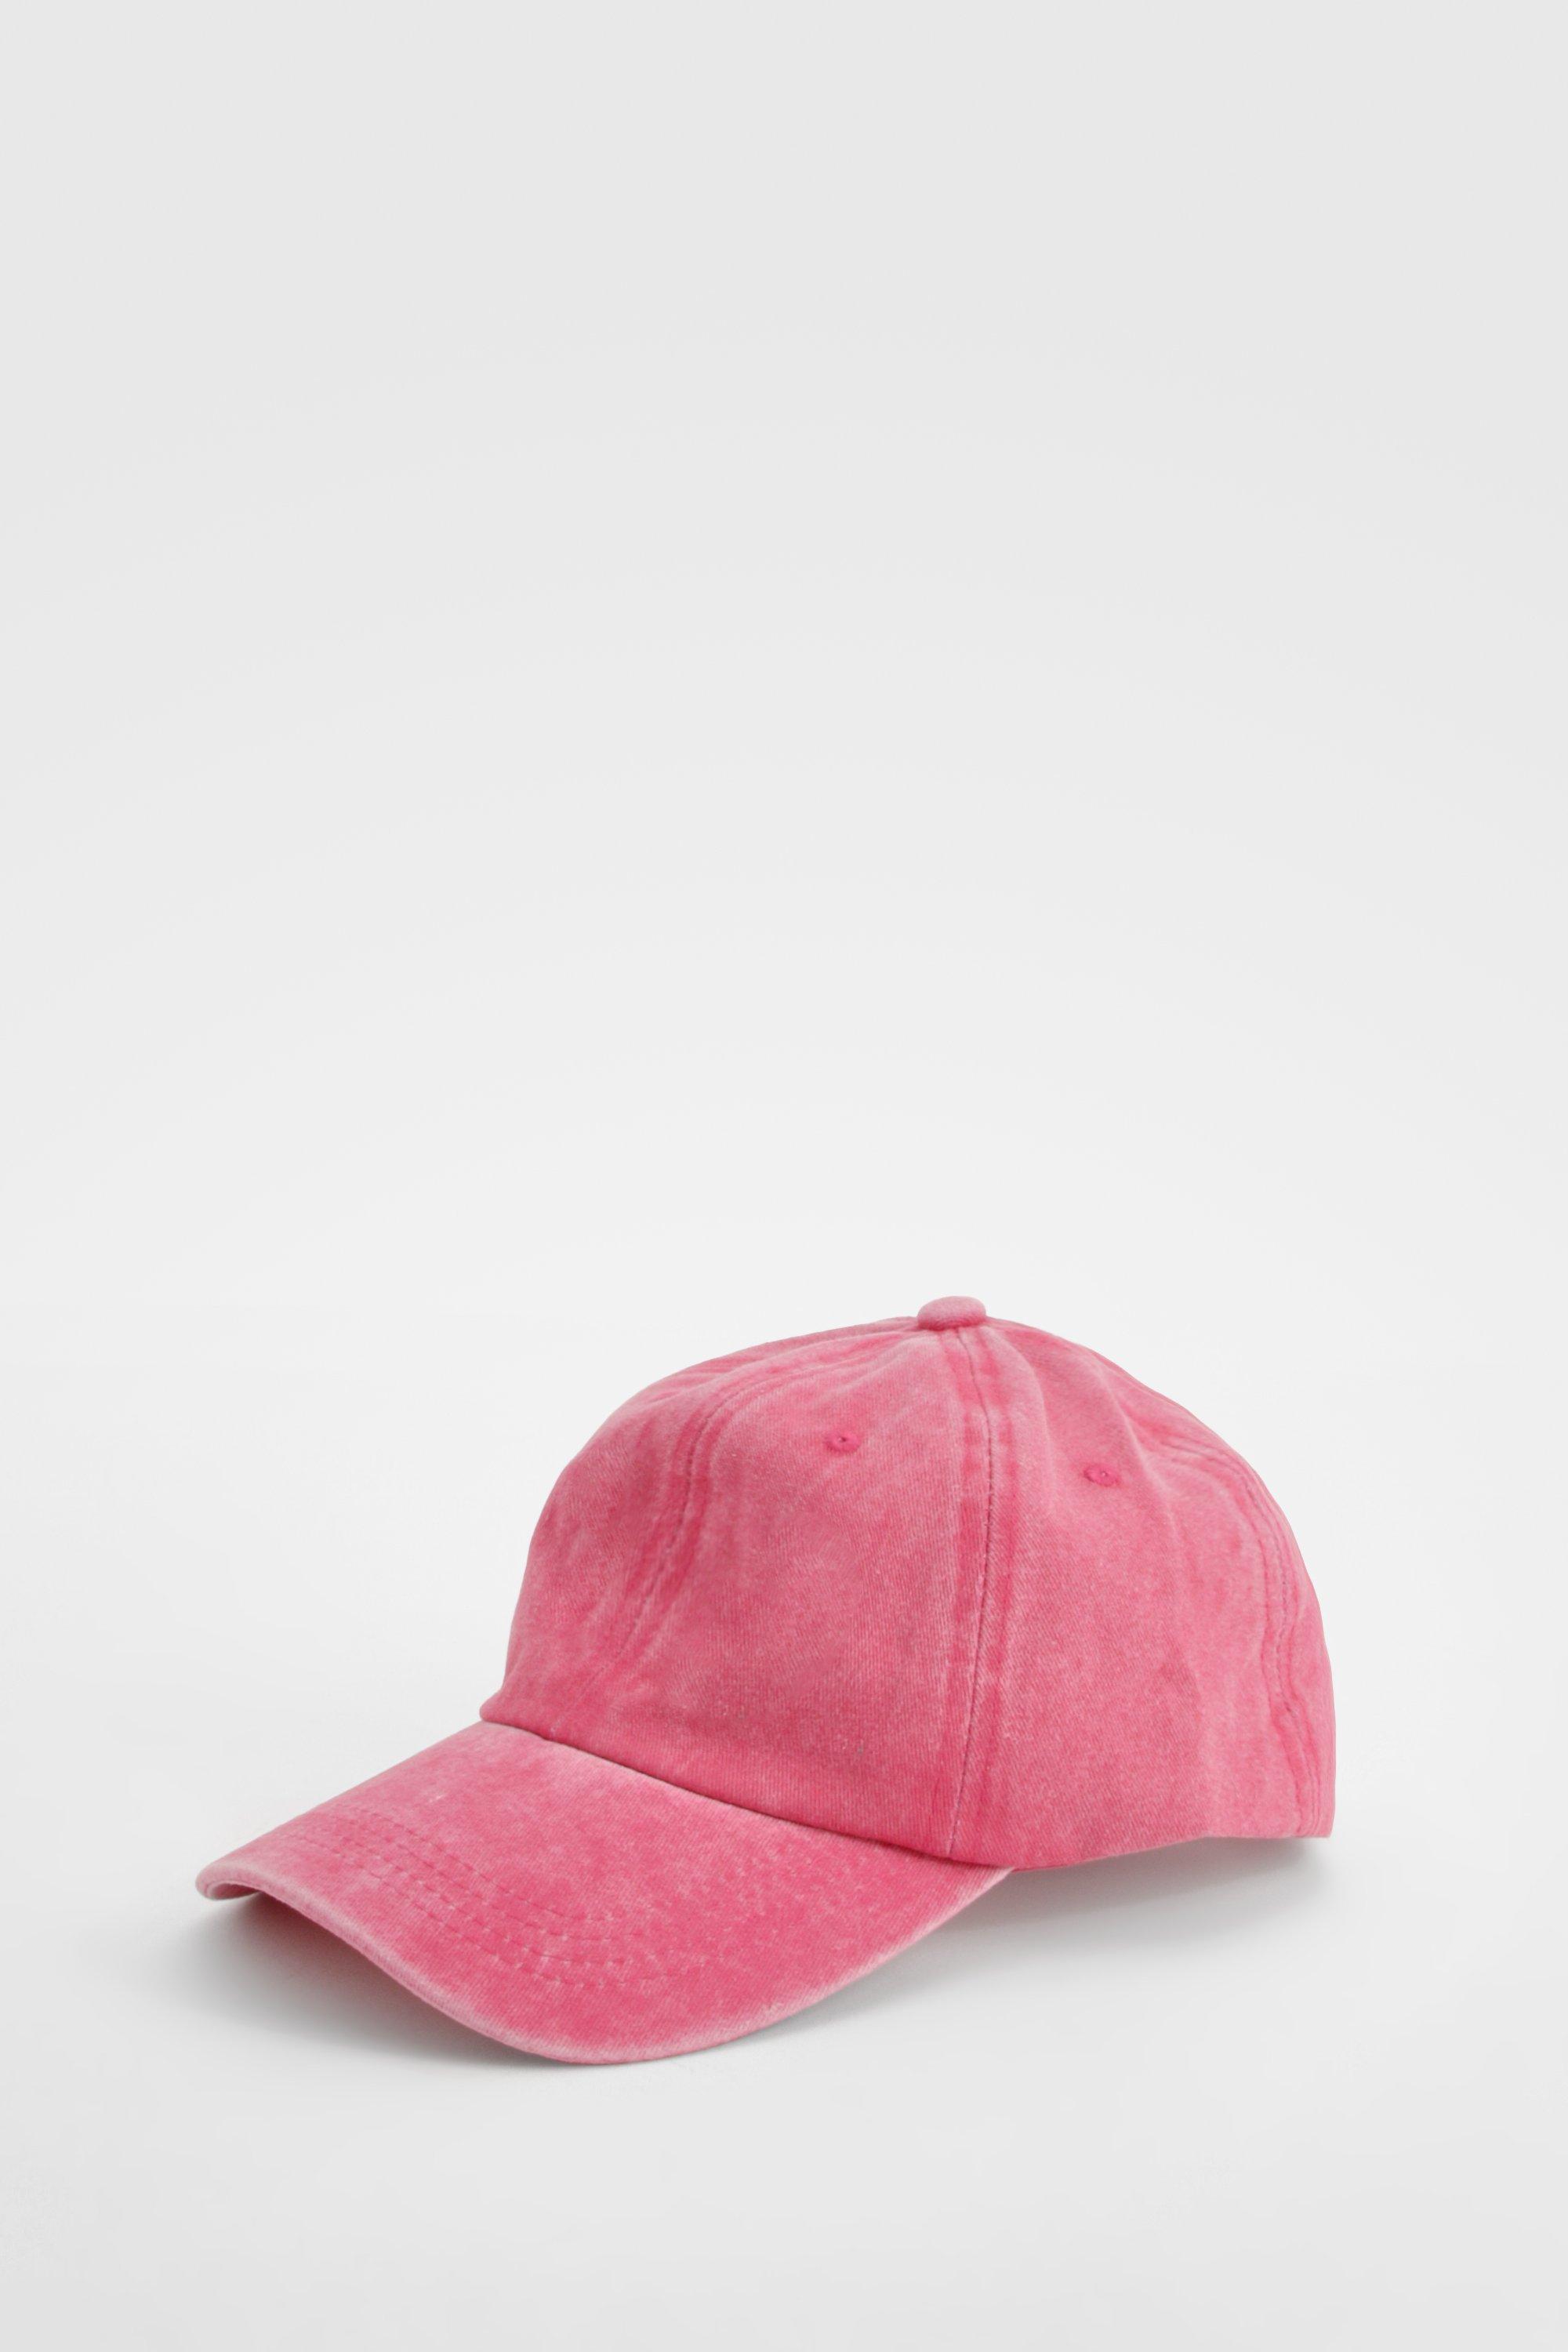 Image of Washed Pink Baseball Cap, Pink